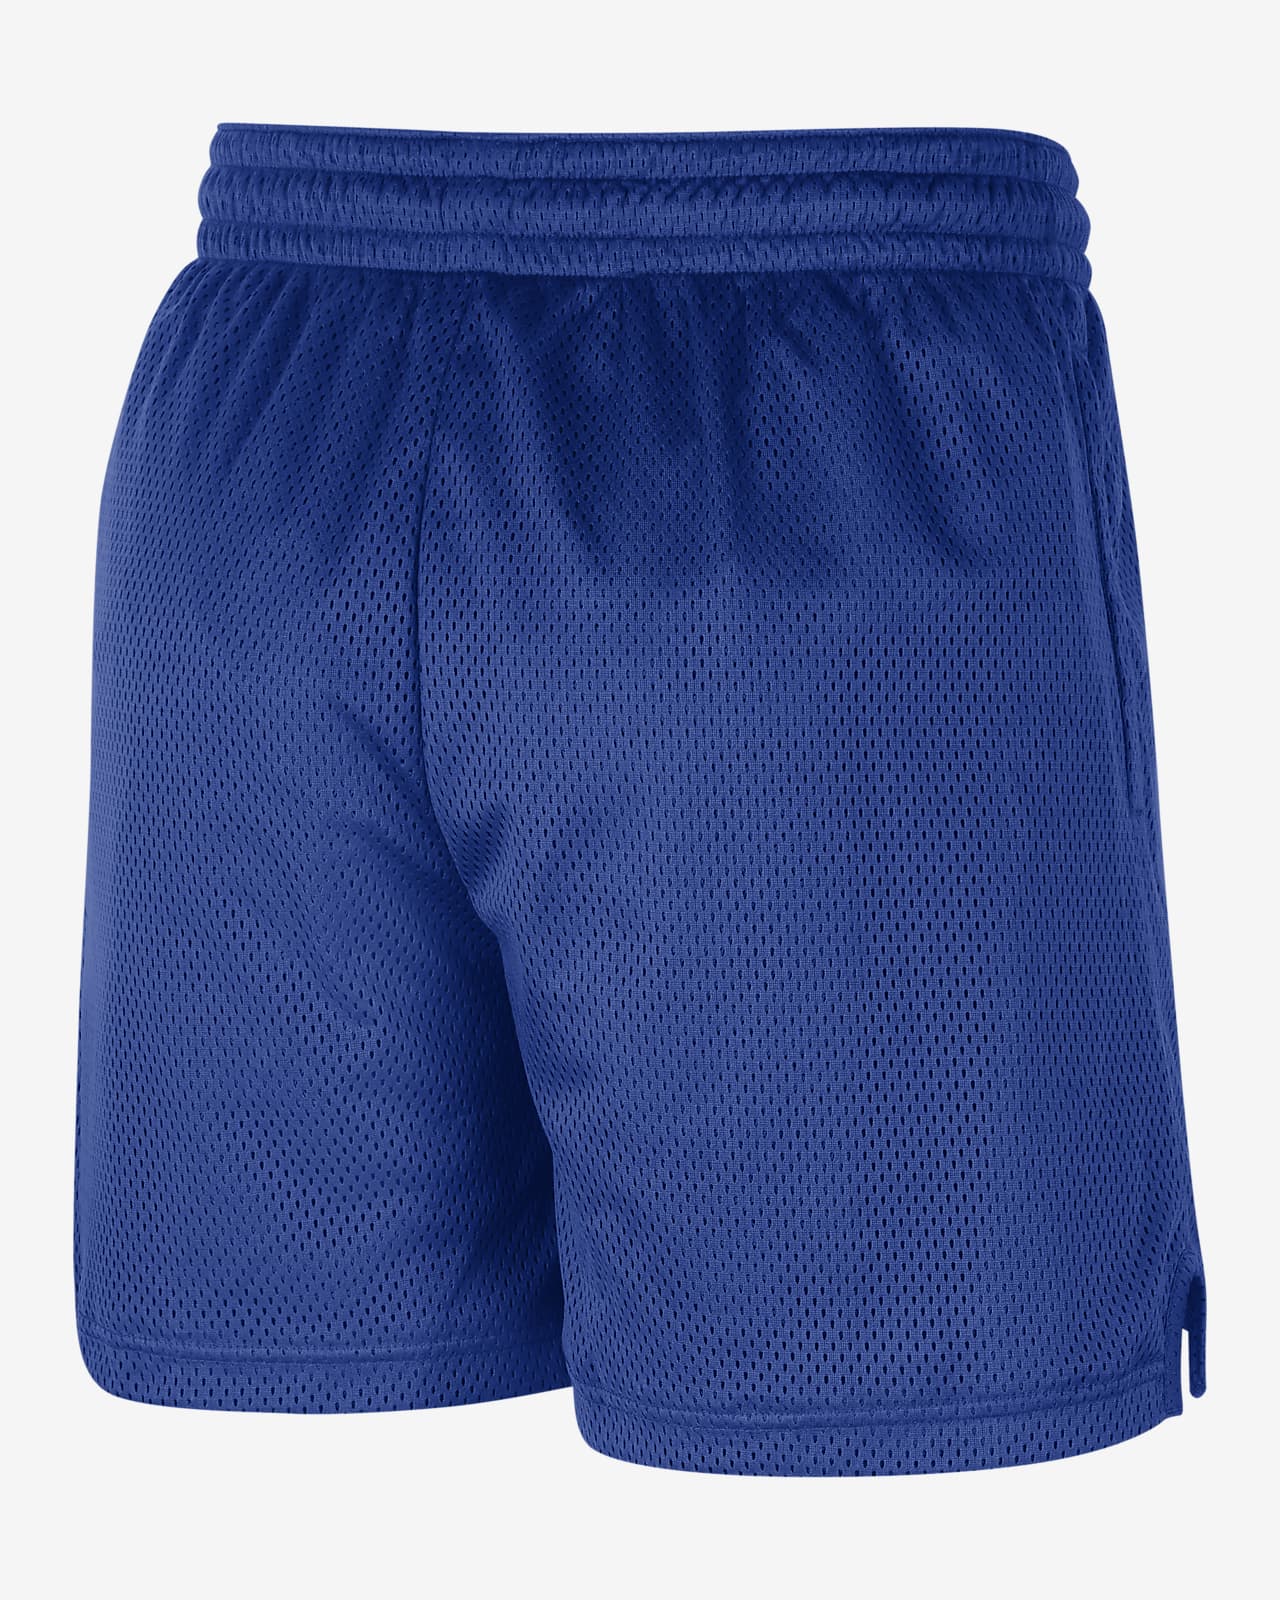 Shop ICER BRANDS MEN Golden State Warriors Mesh Shorts